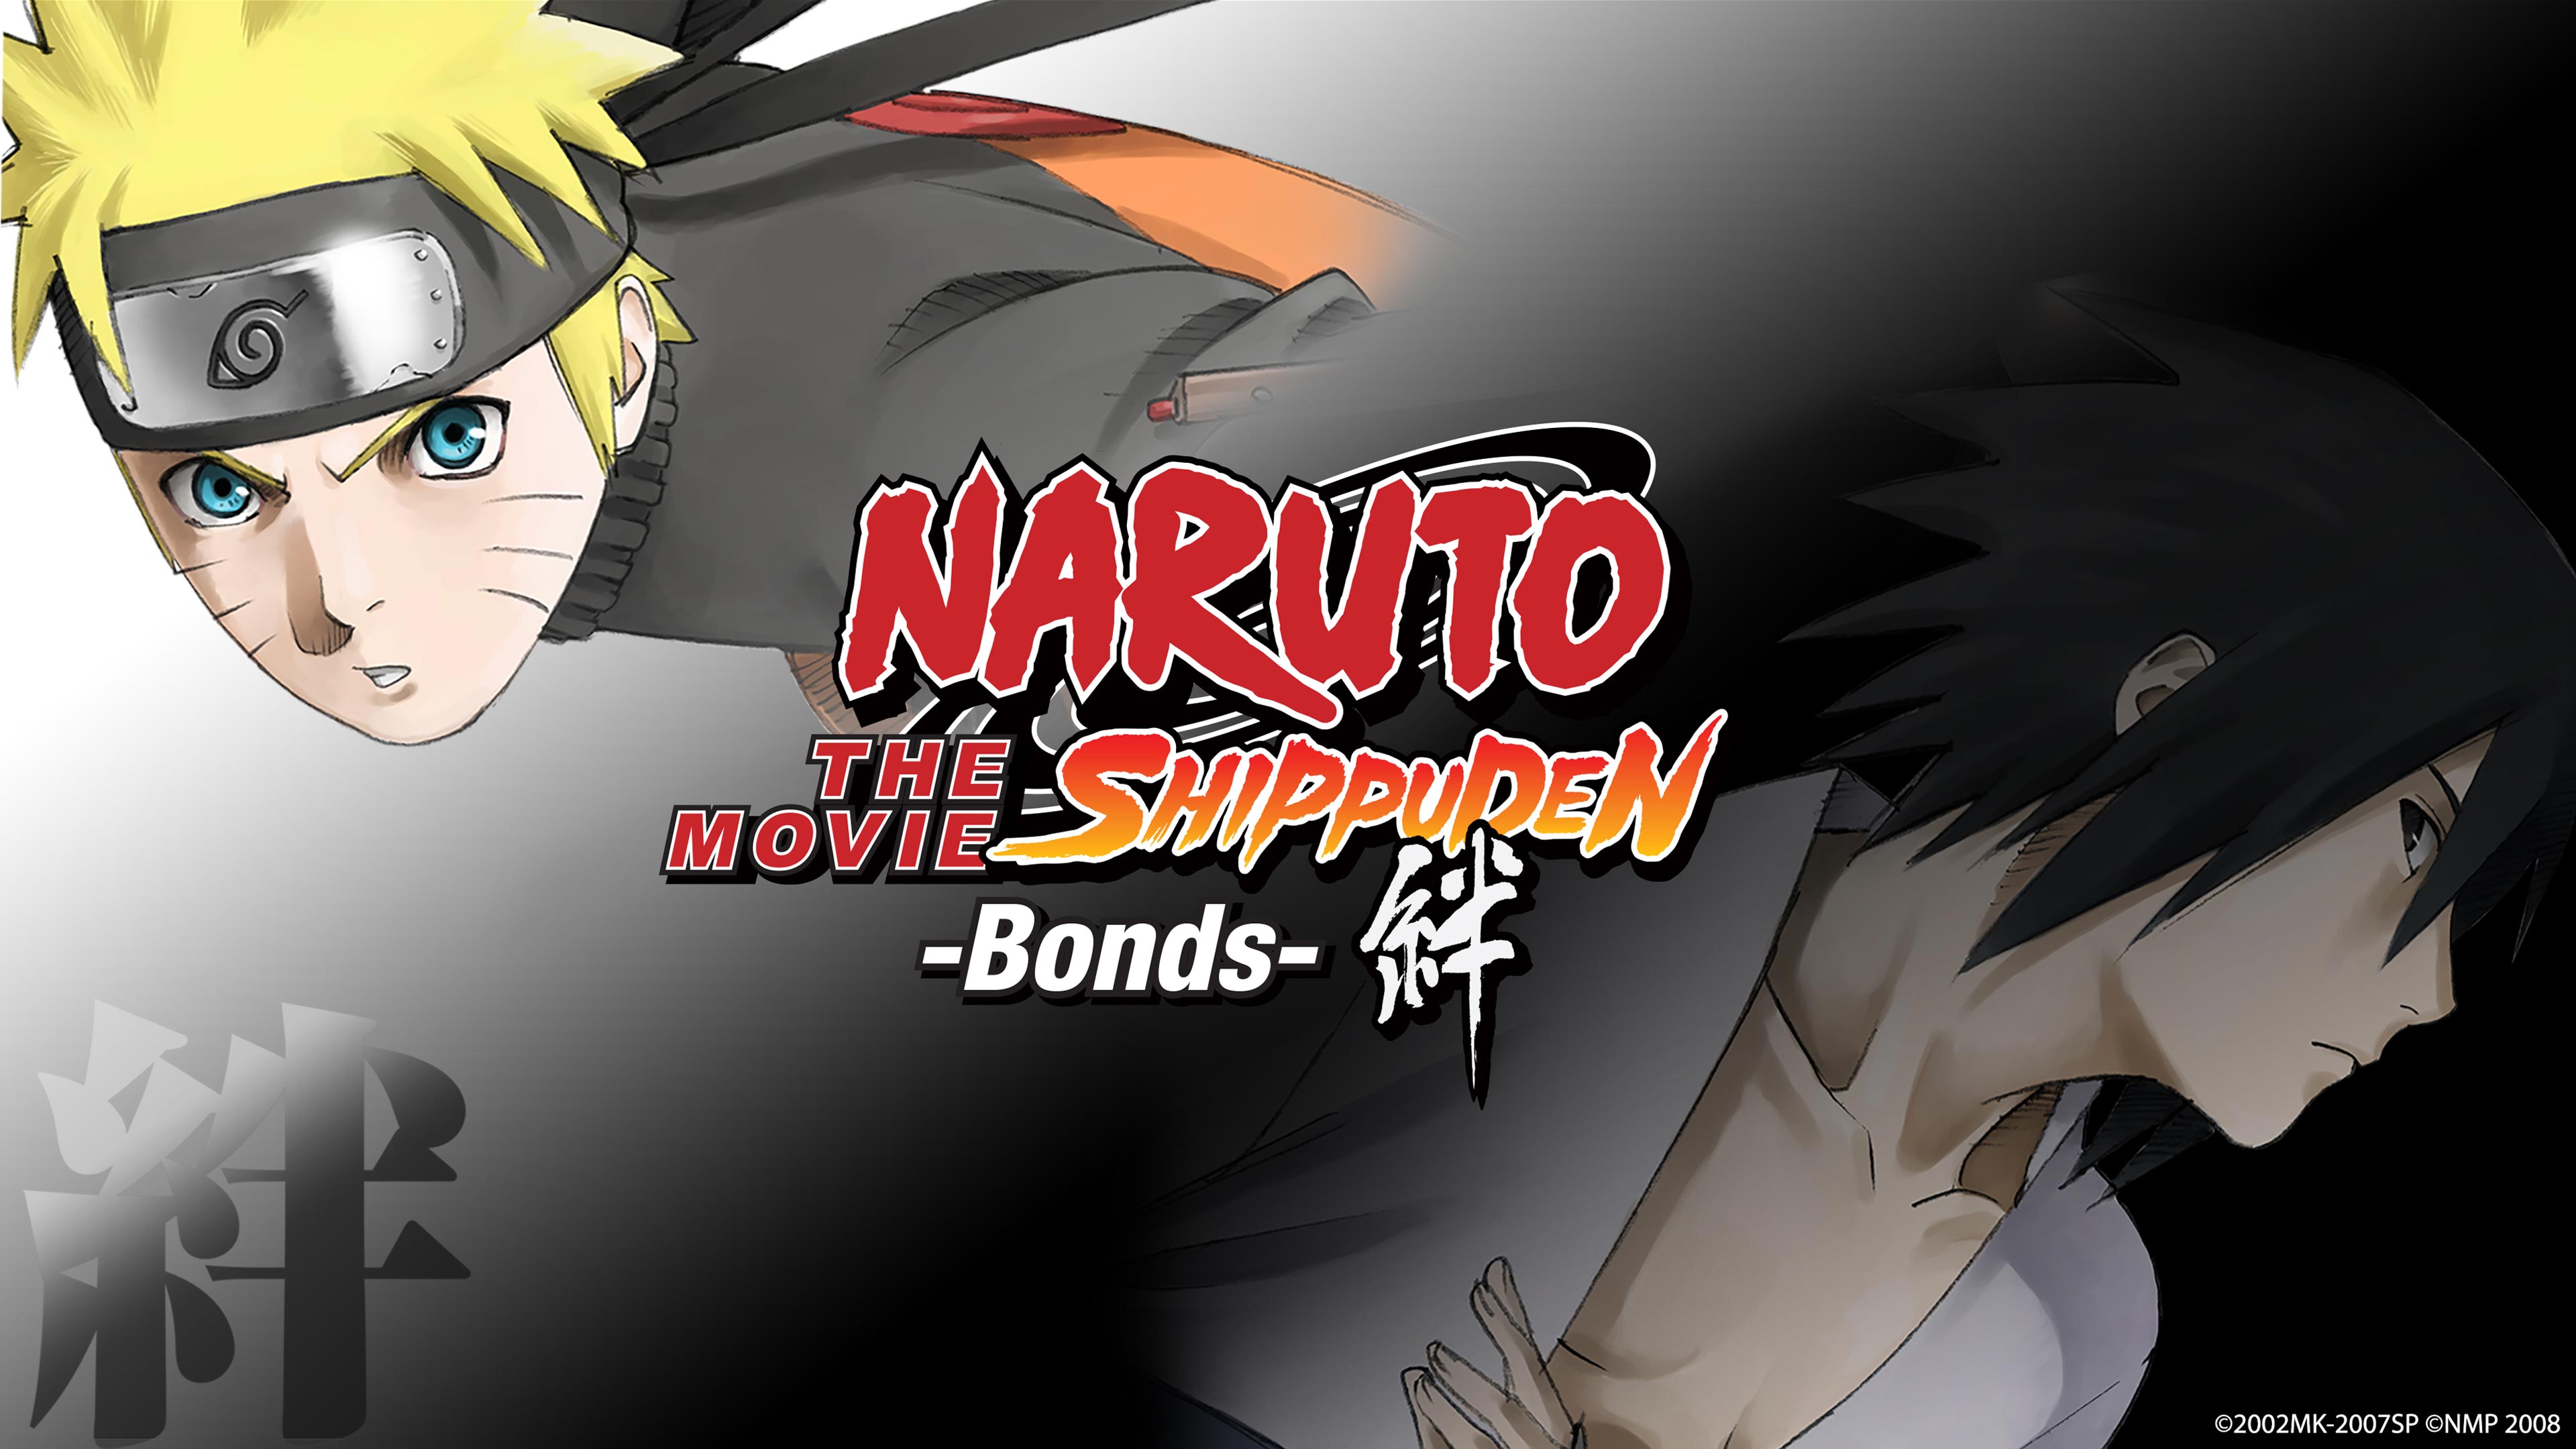  Claro Vídeo adiciona mais filmes de Naruto